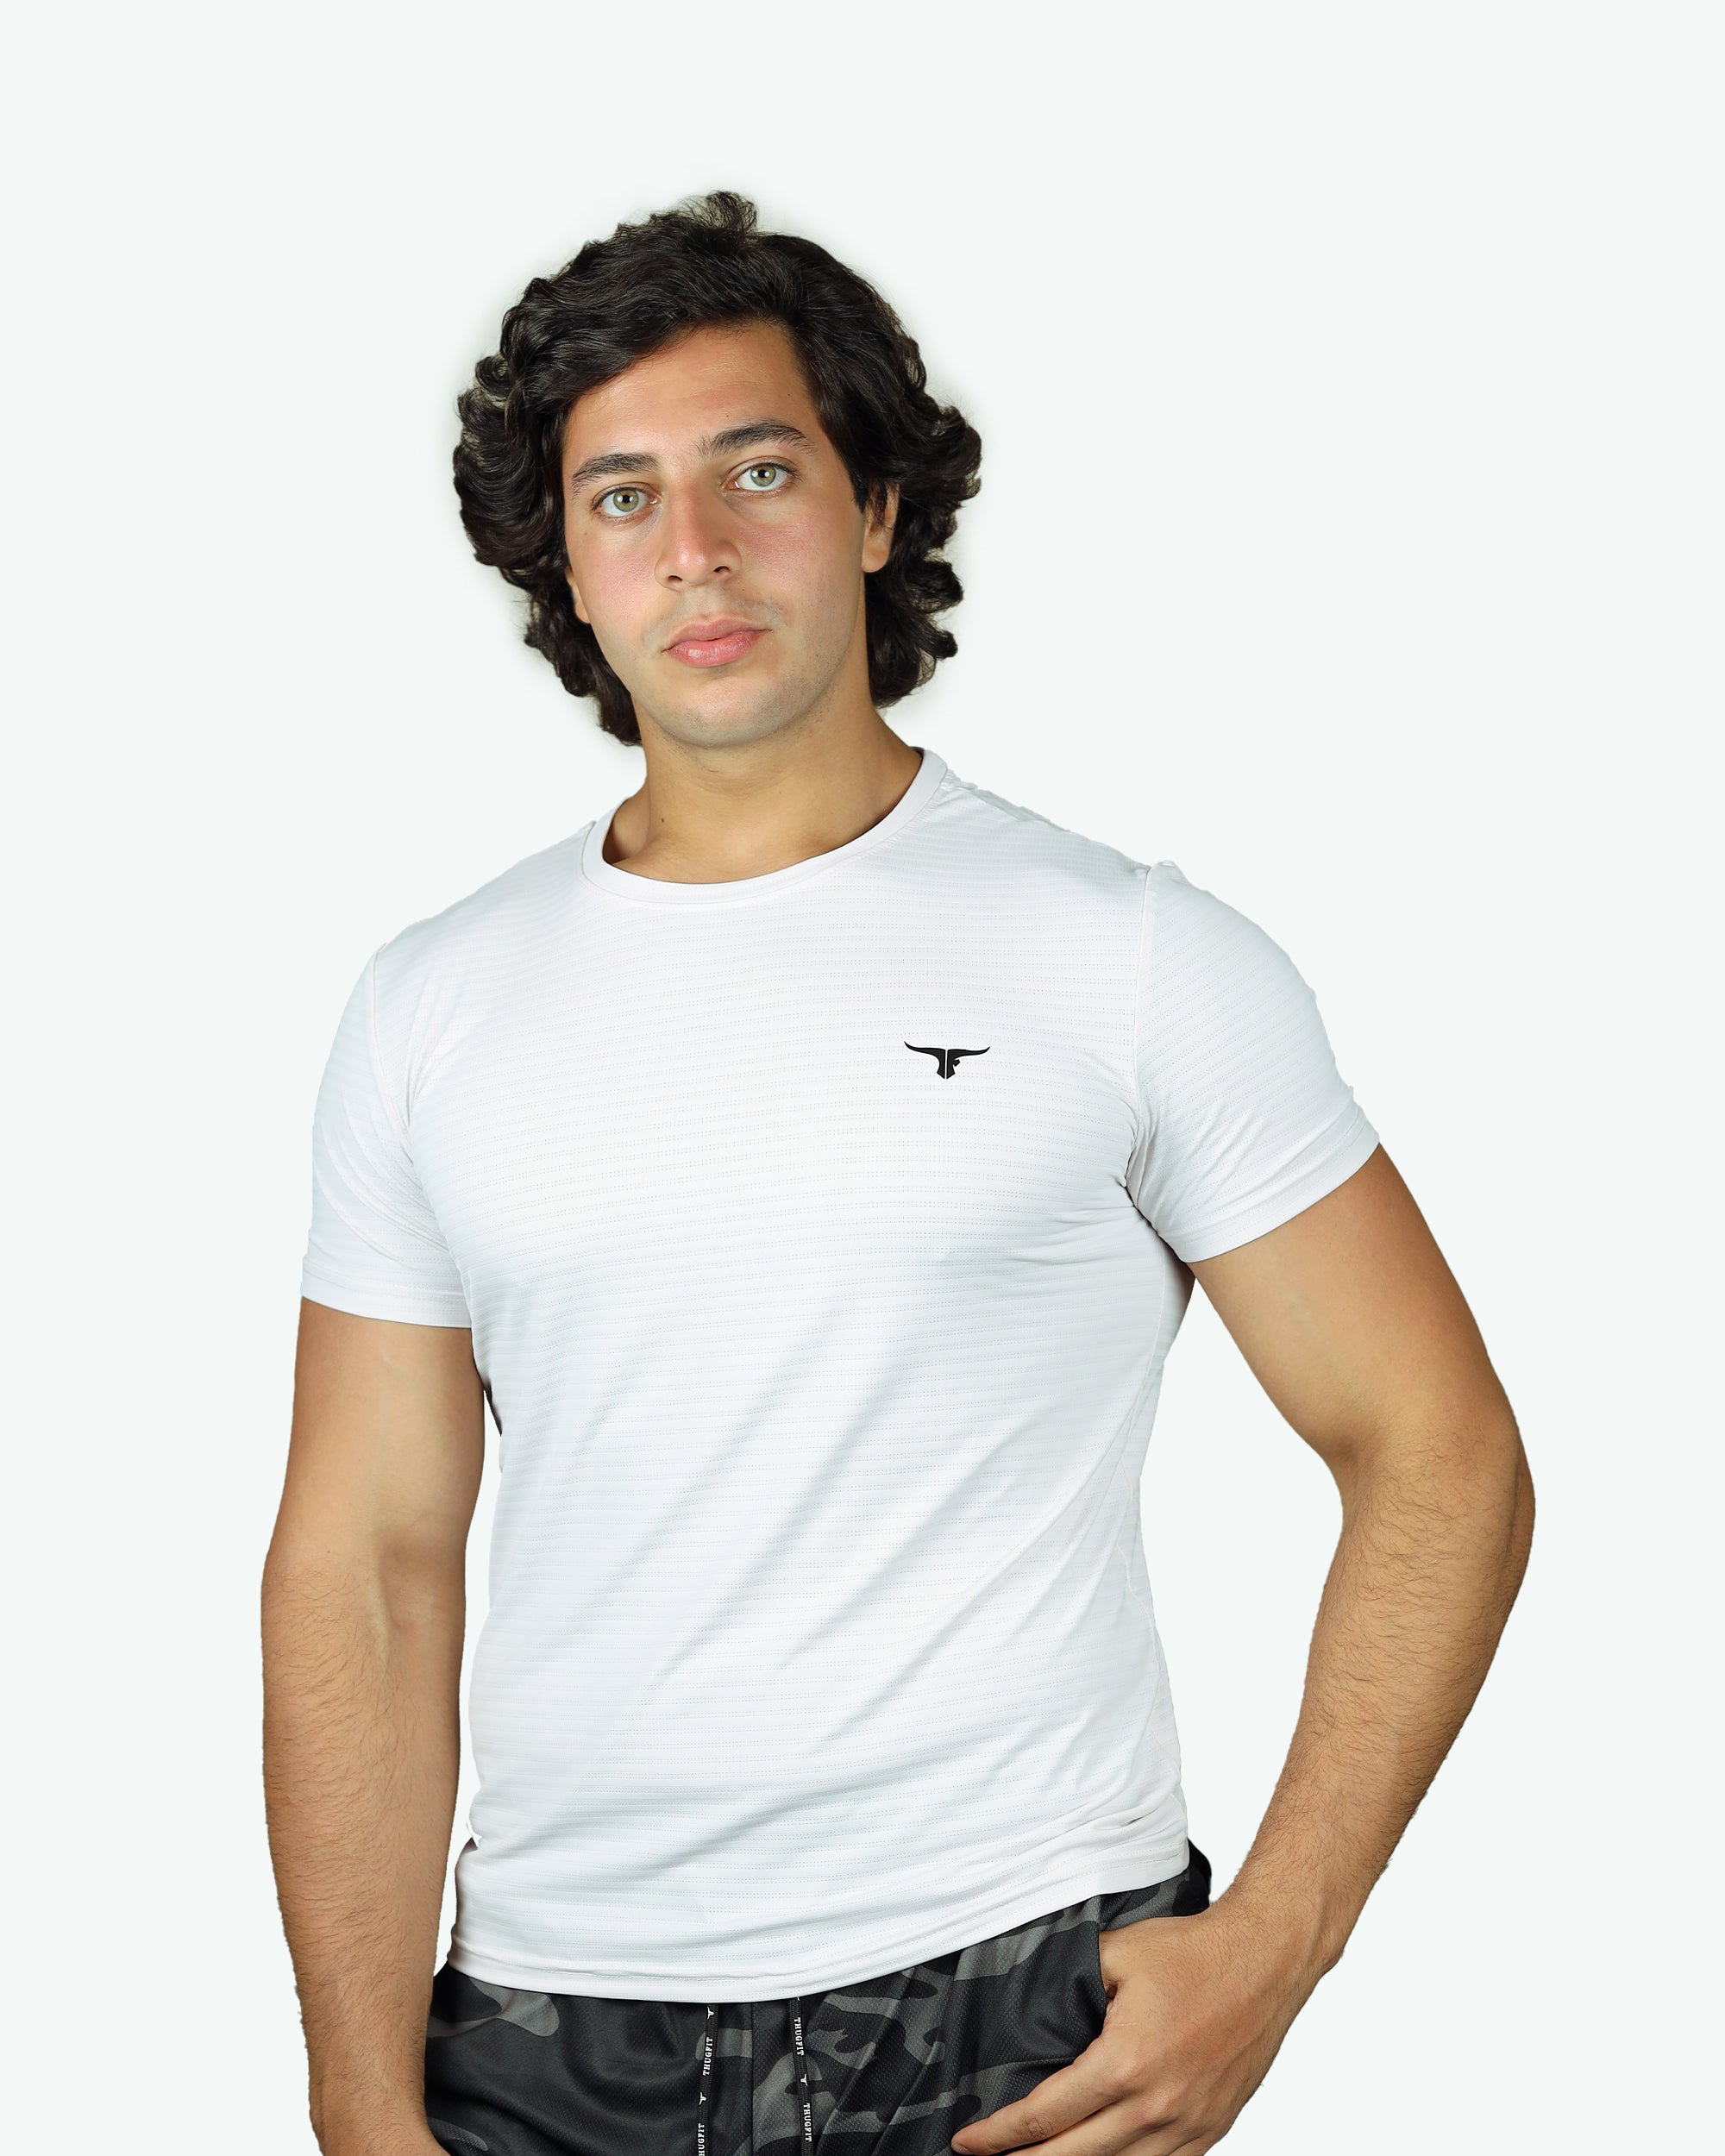 AirmanArmor Muscle Fit T-Shirt - THUGFIT